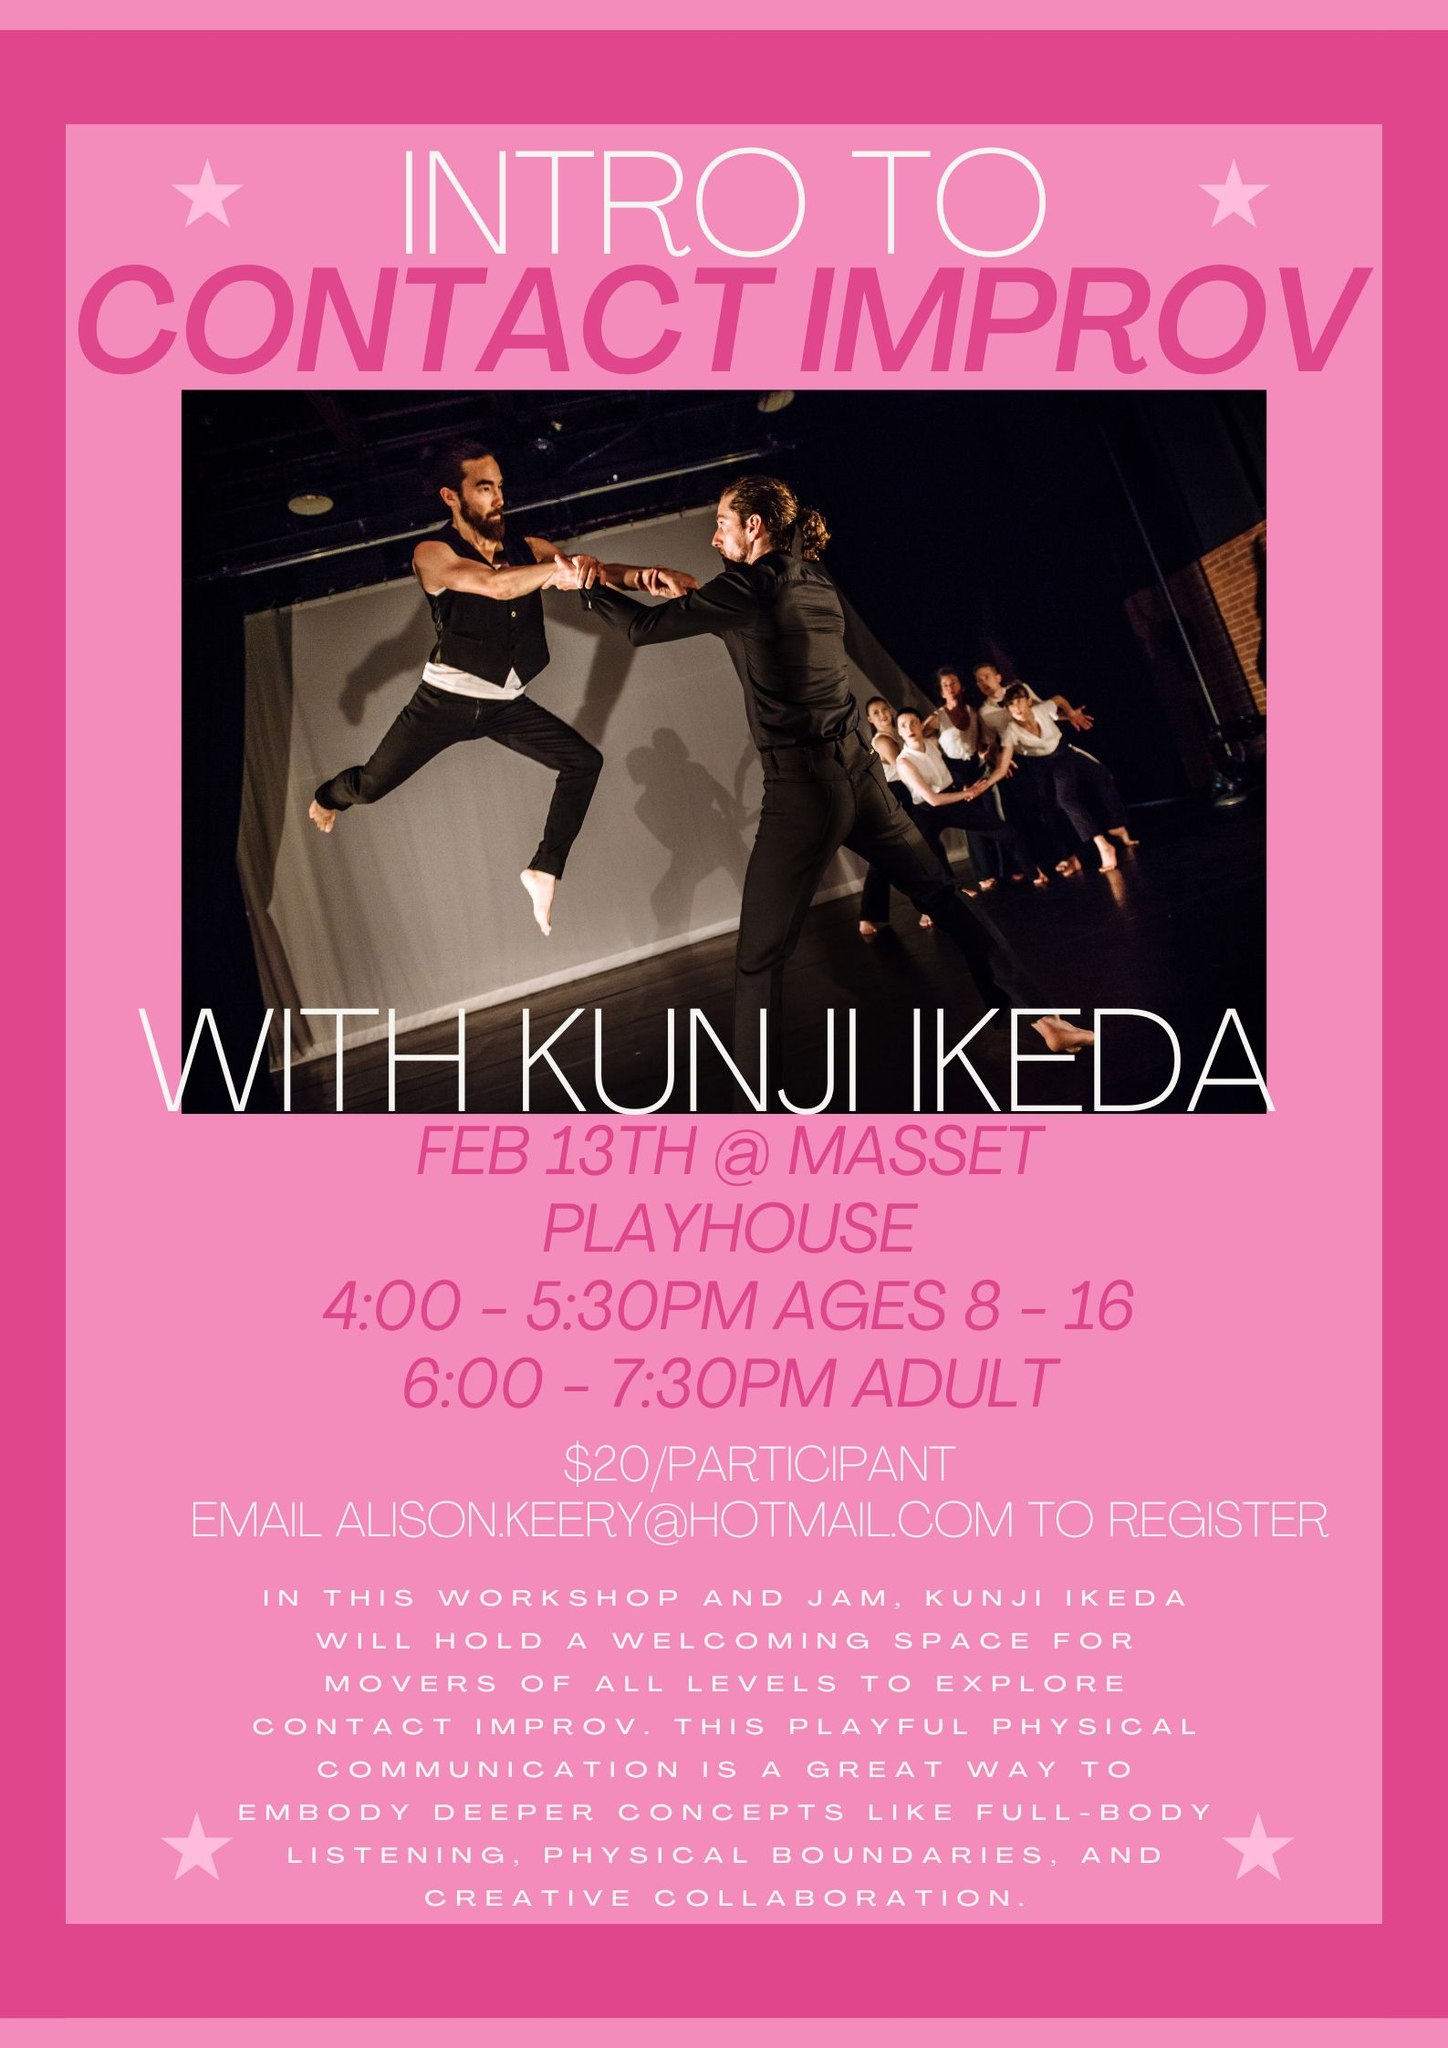 Intro to Contact Improv with Kunji Ikeda